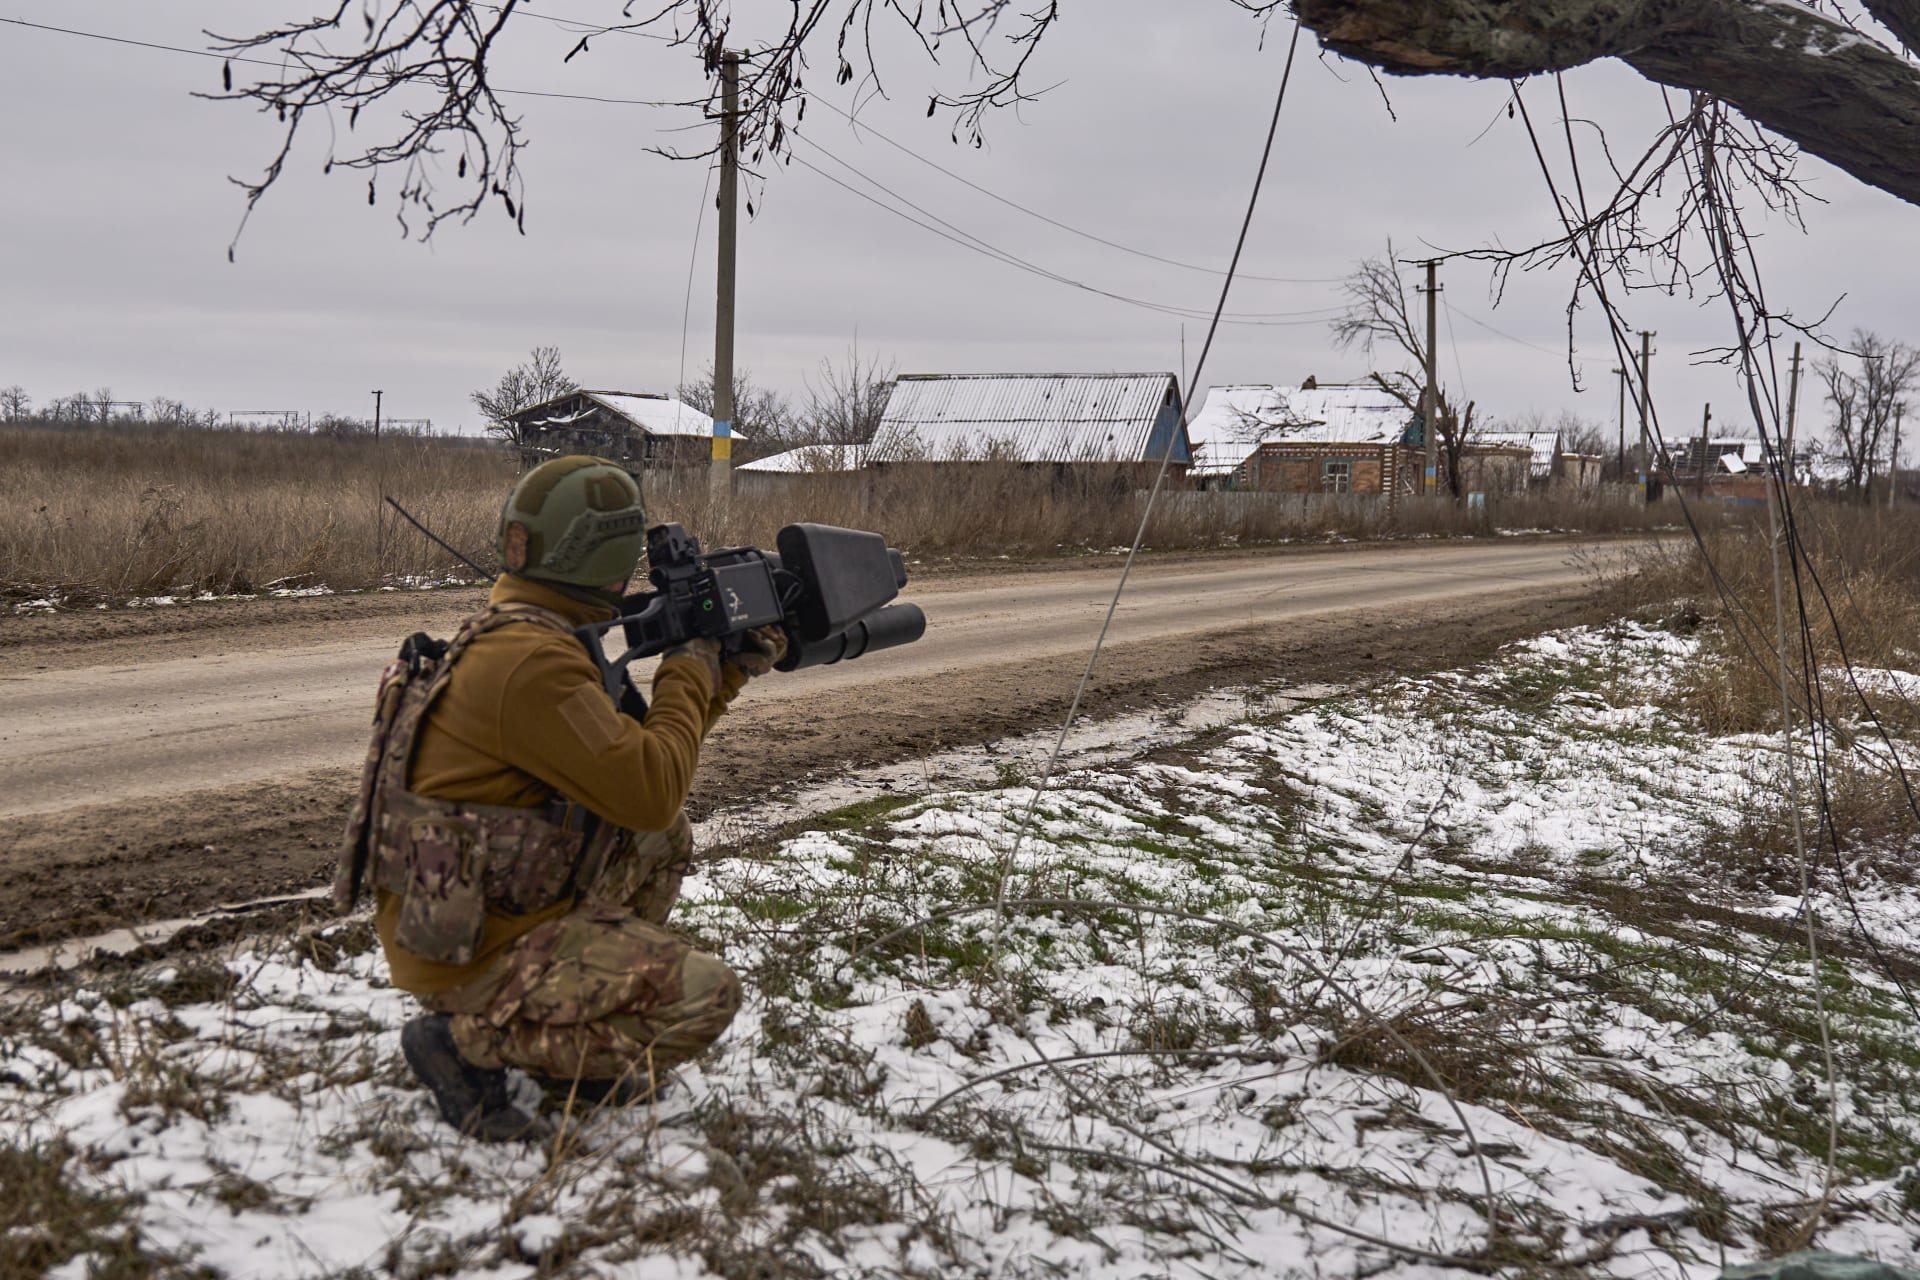 Ukrajinský voják z 10. samostatné horské útočné brigády „Edelweiss“ drží speciální protidronové dělo nedaleko Bachmutu.